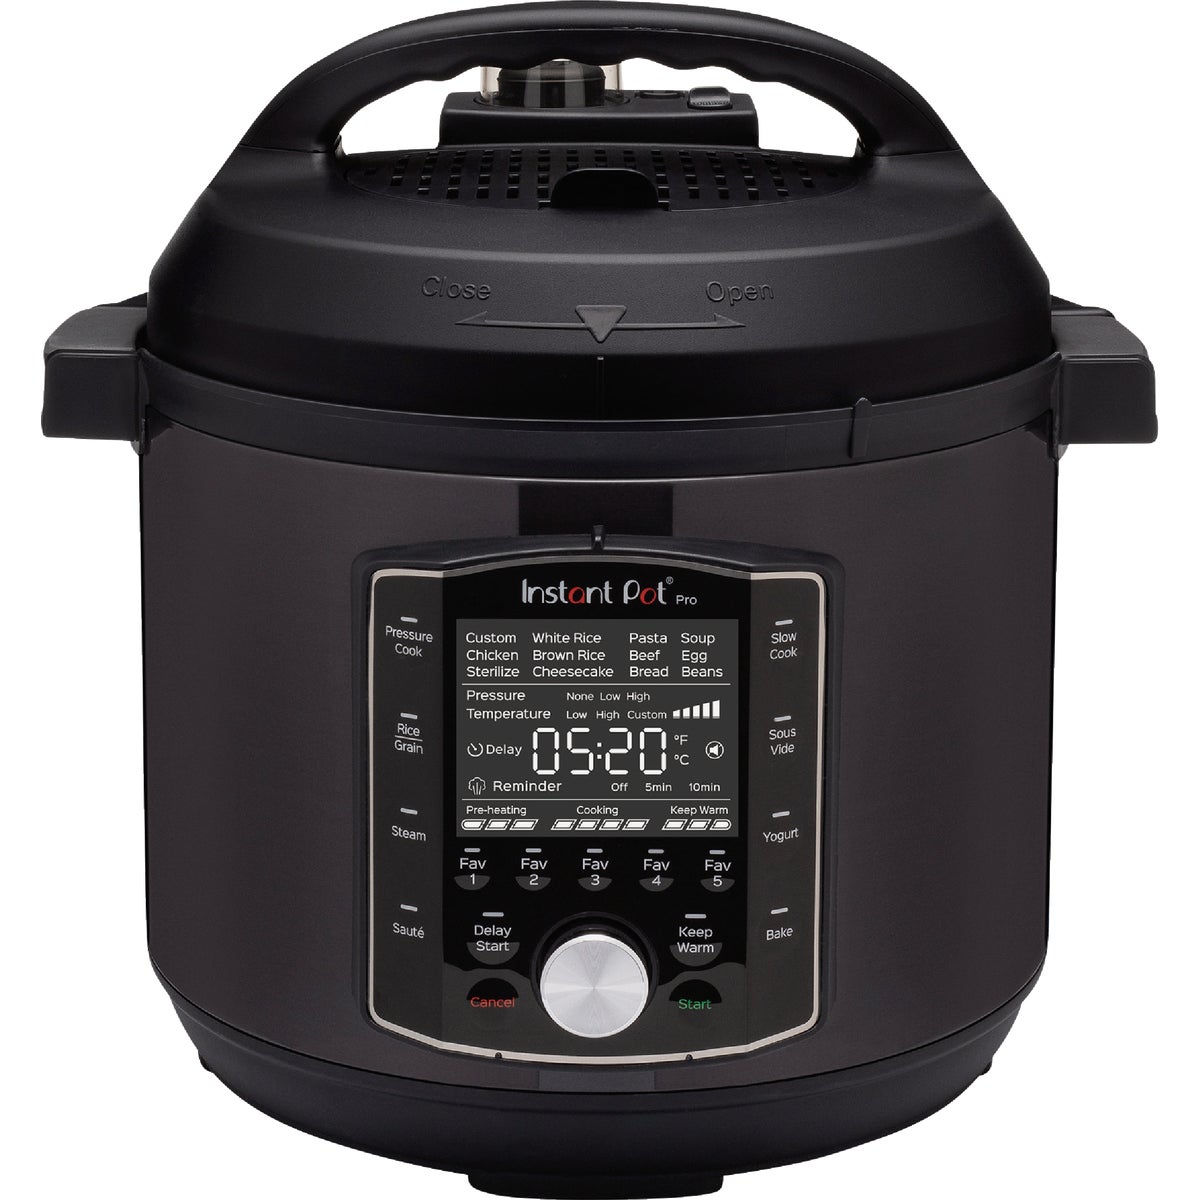 Instant Pot Pro 6 Qt. Multi-Use Pressure Cooker